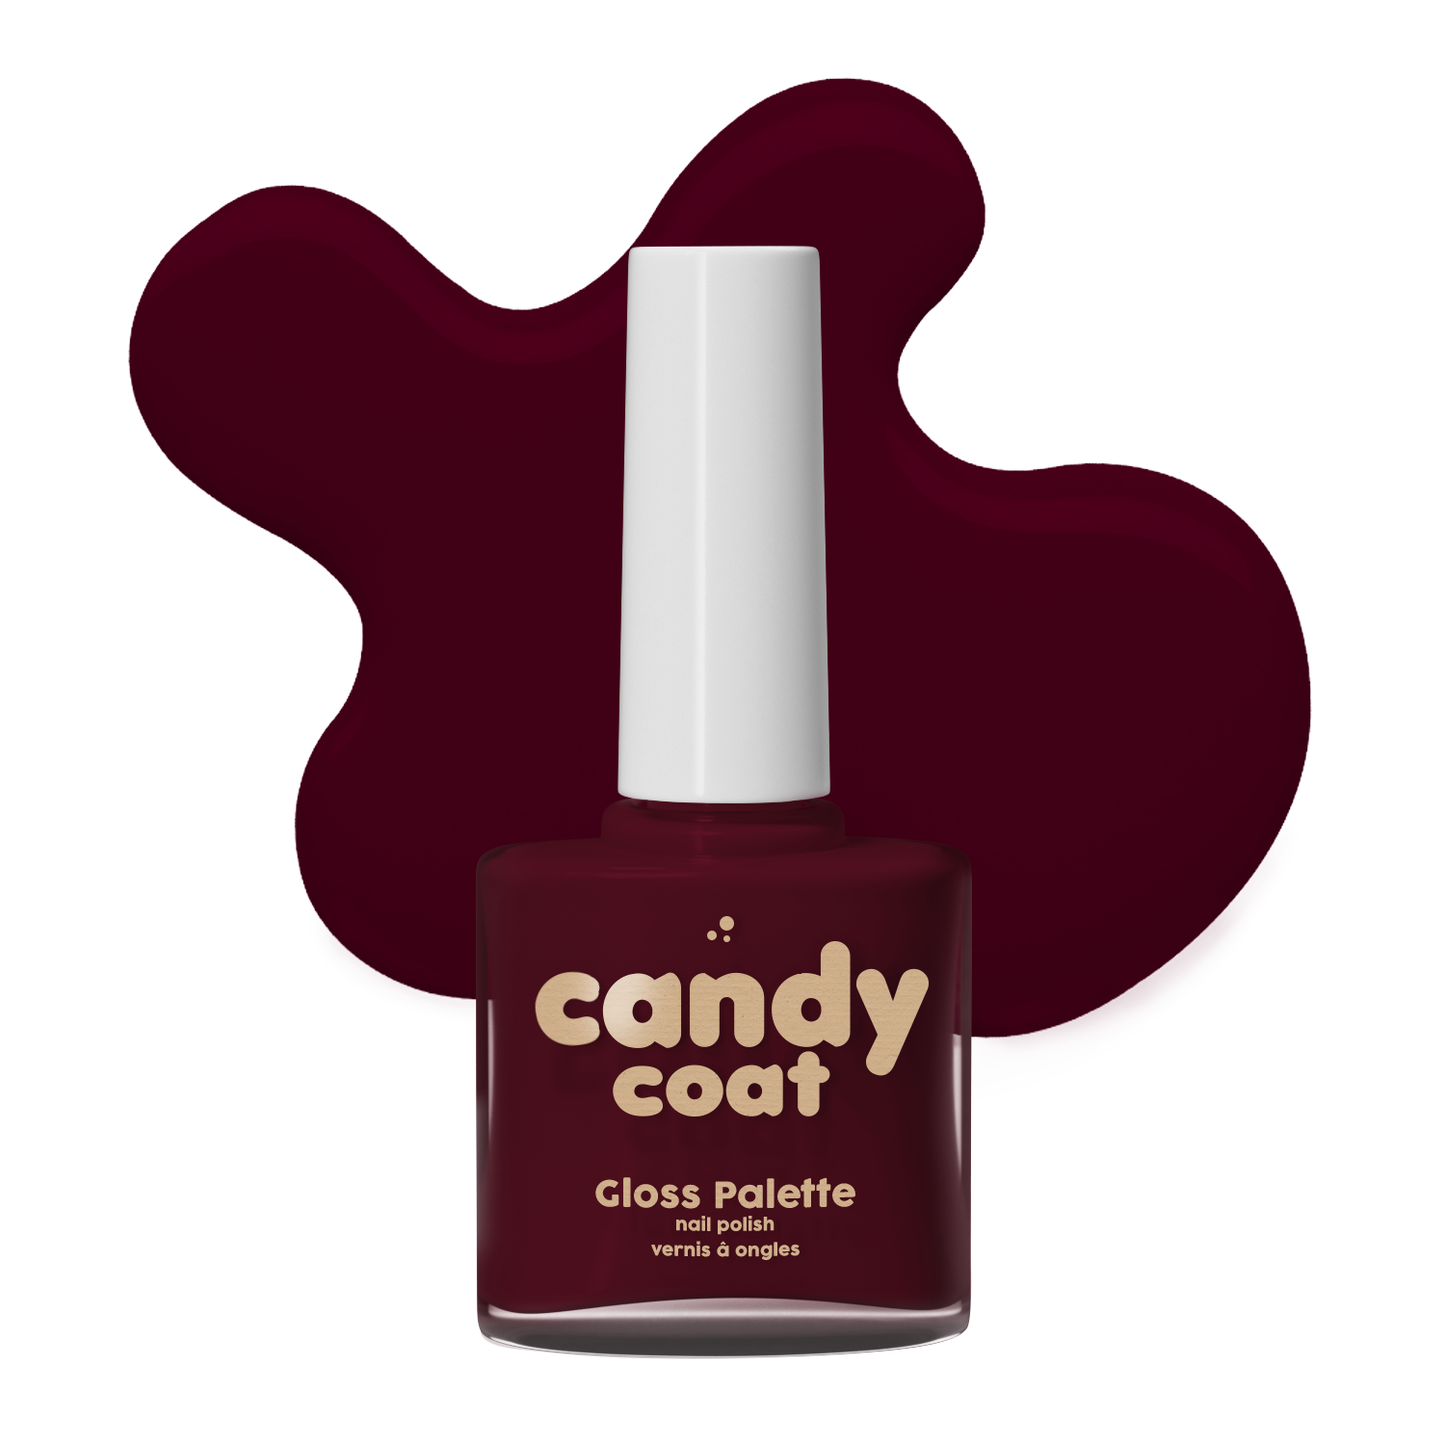 Candy Coat GLOSS Palette - Yana - Nº 174